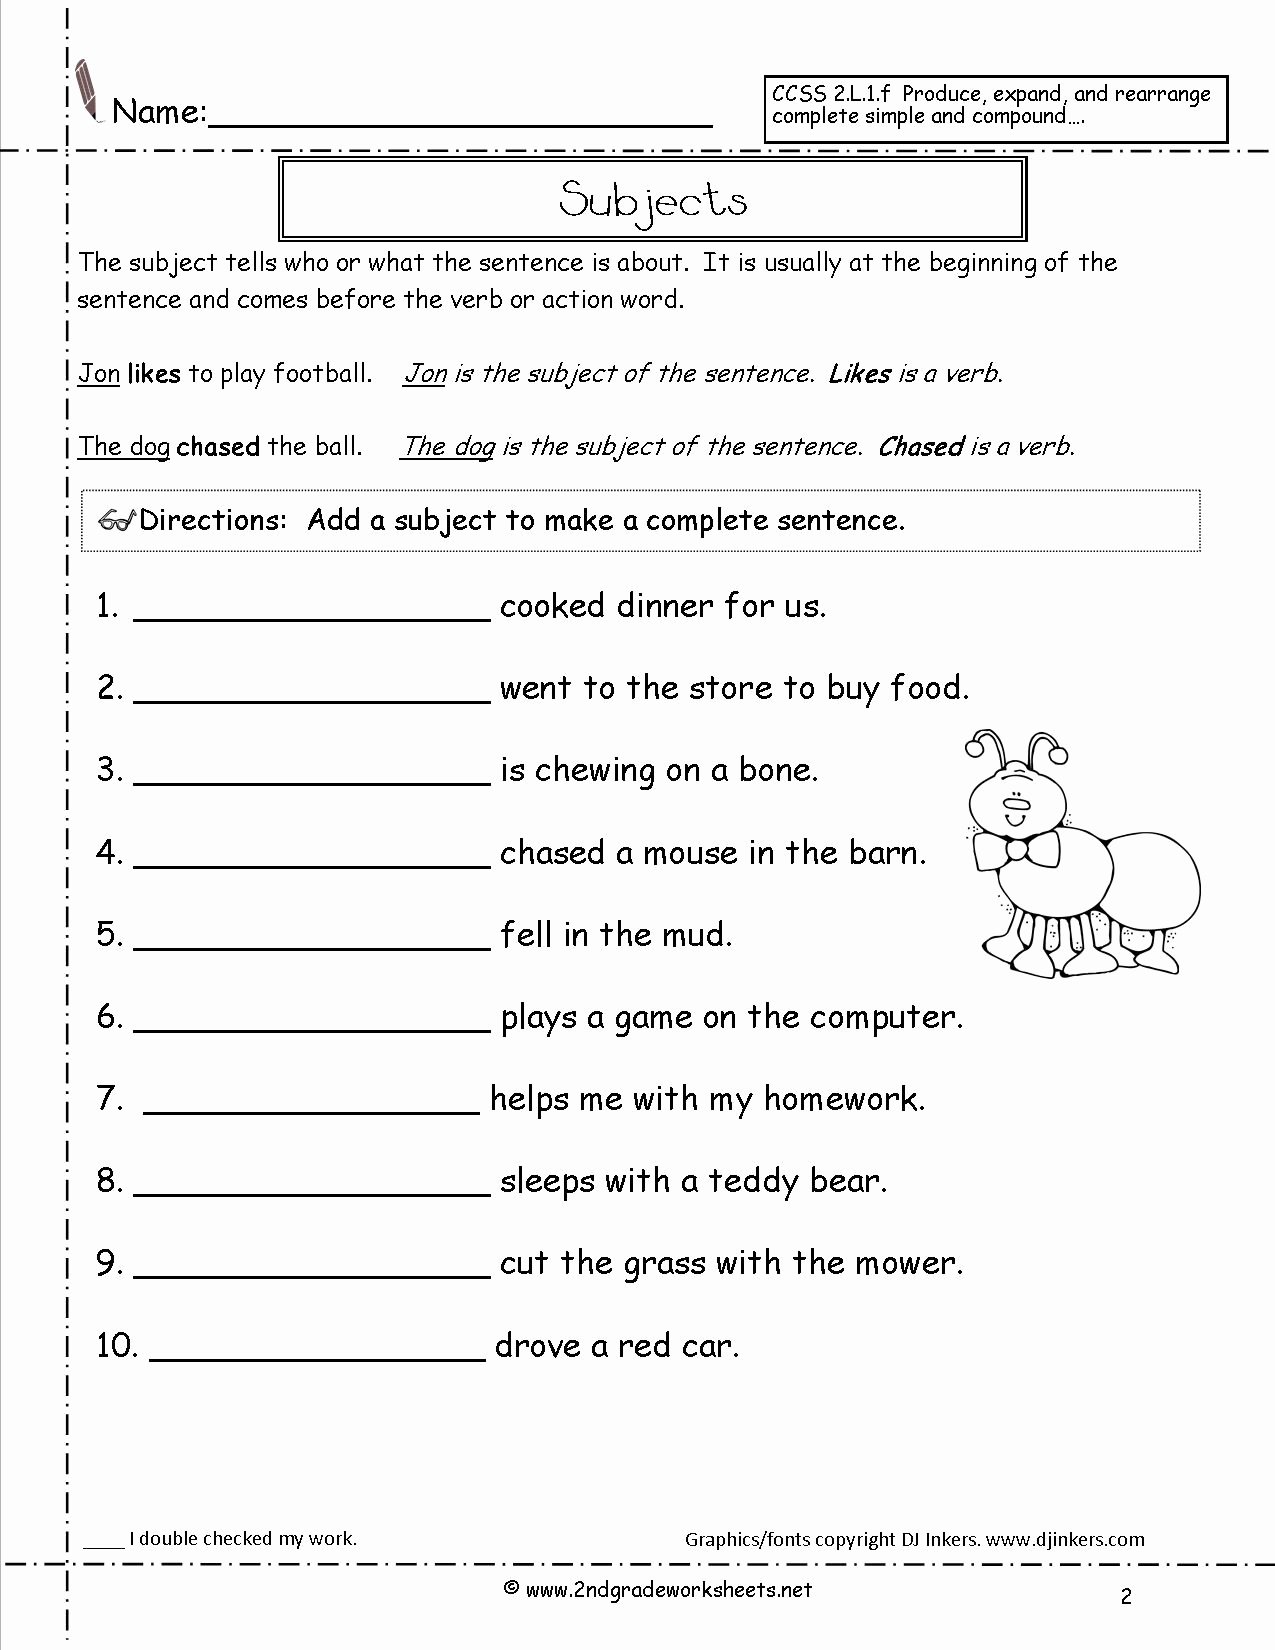 Kinds Of Sentences Worksheet New Sentences Worksheets From the Teacher S Guide